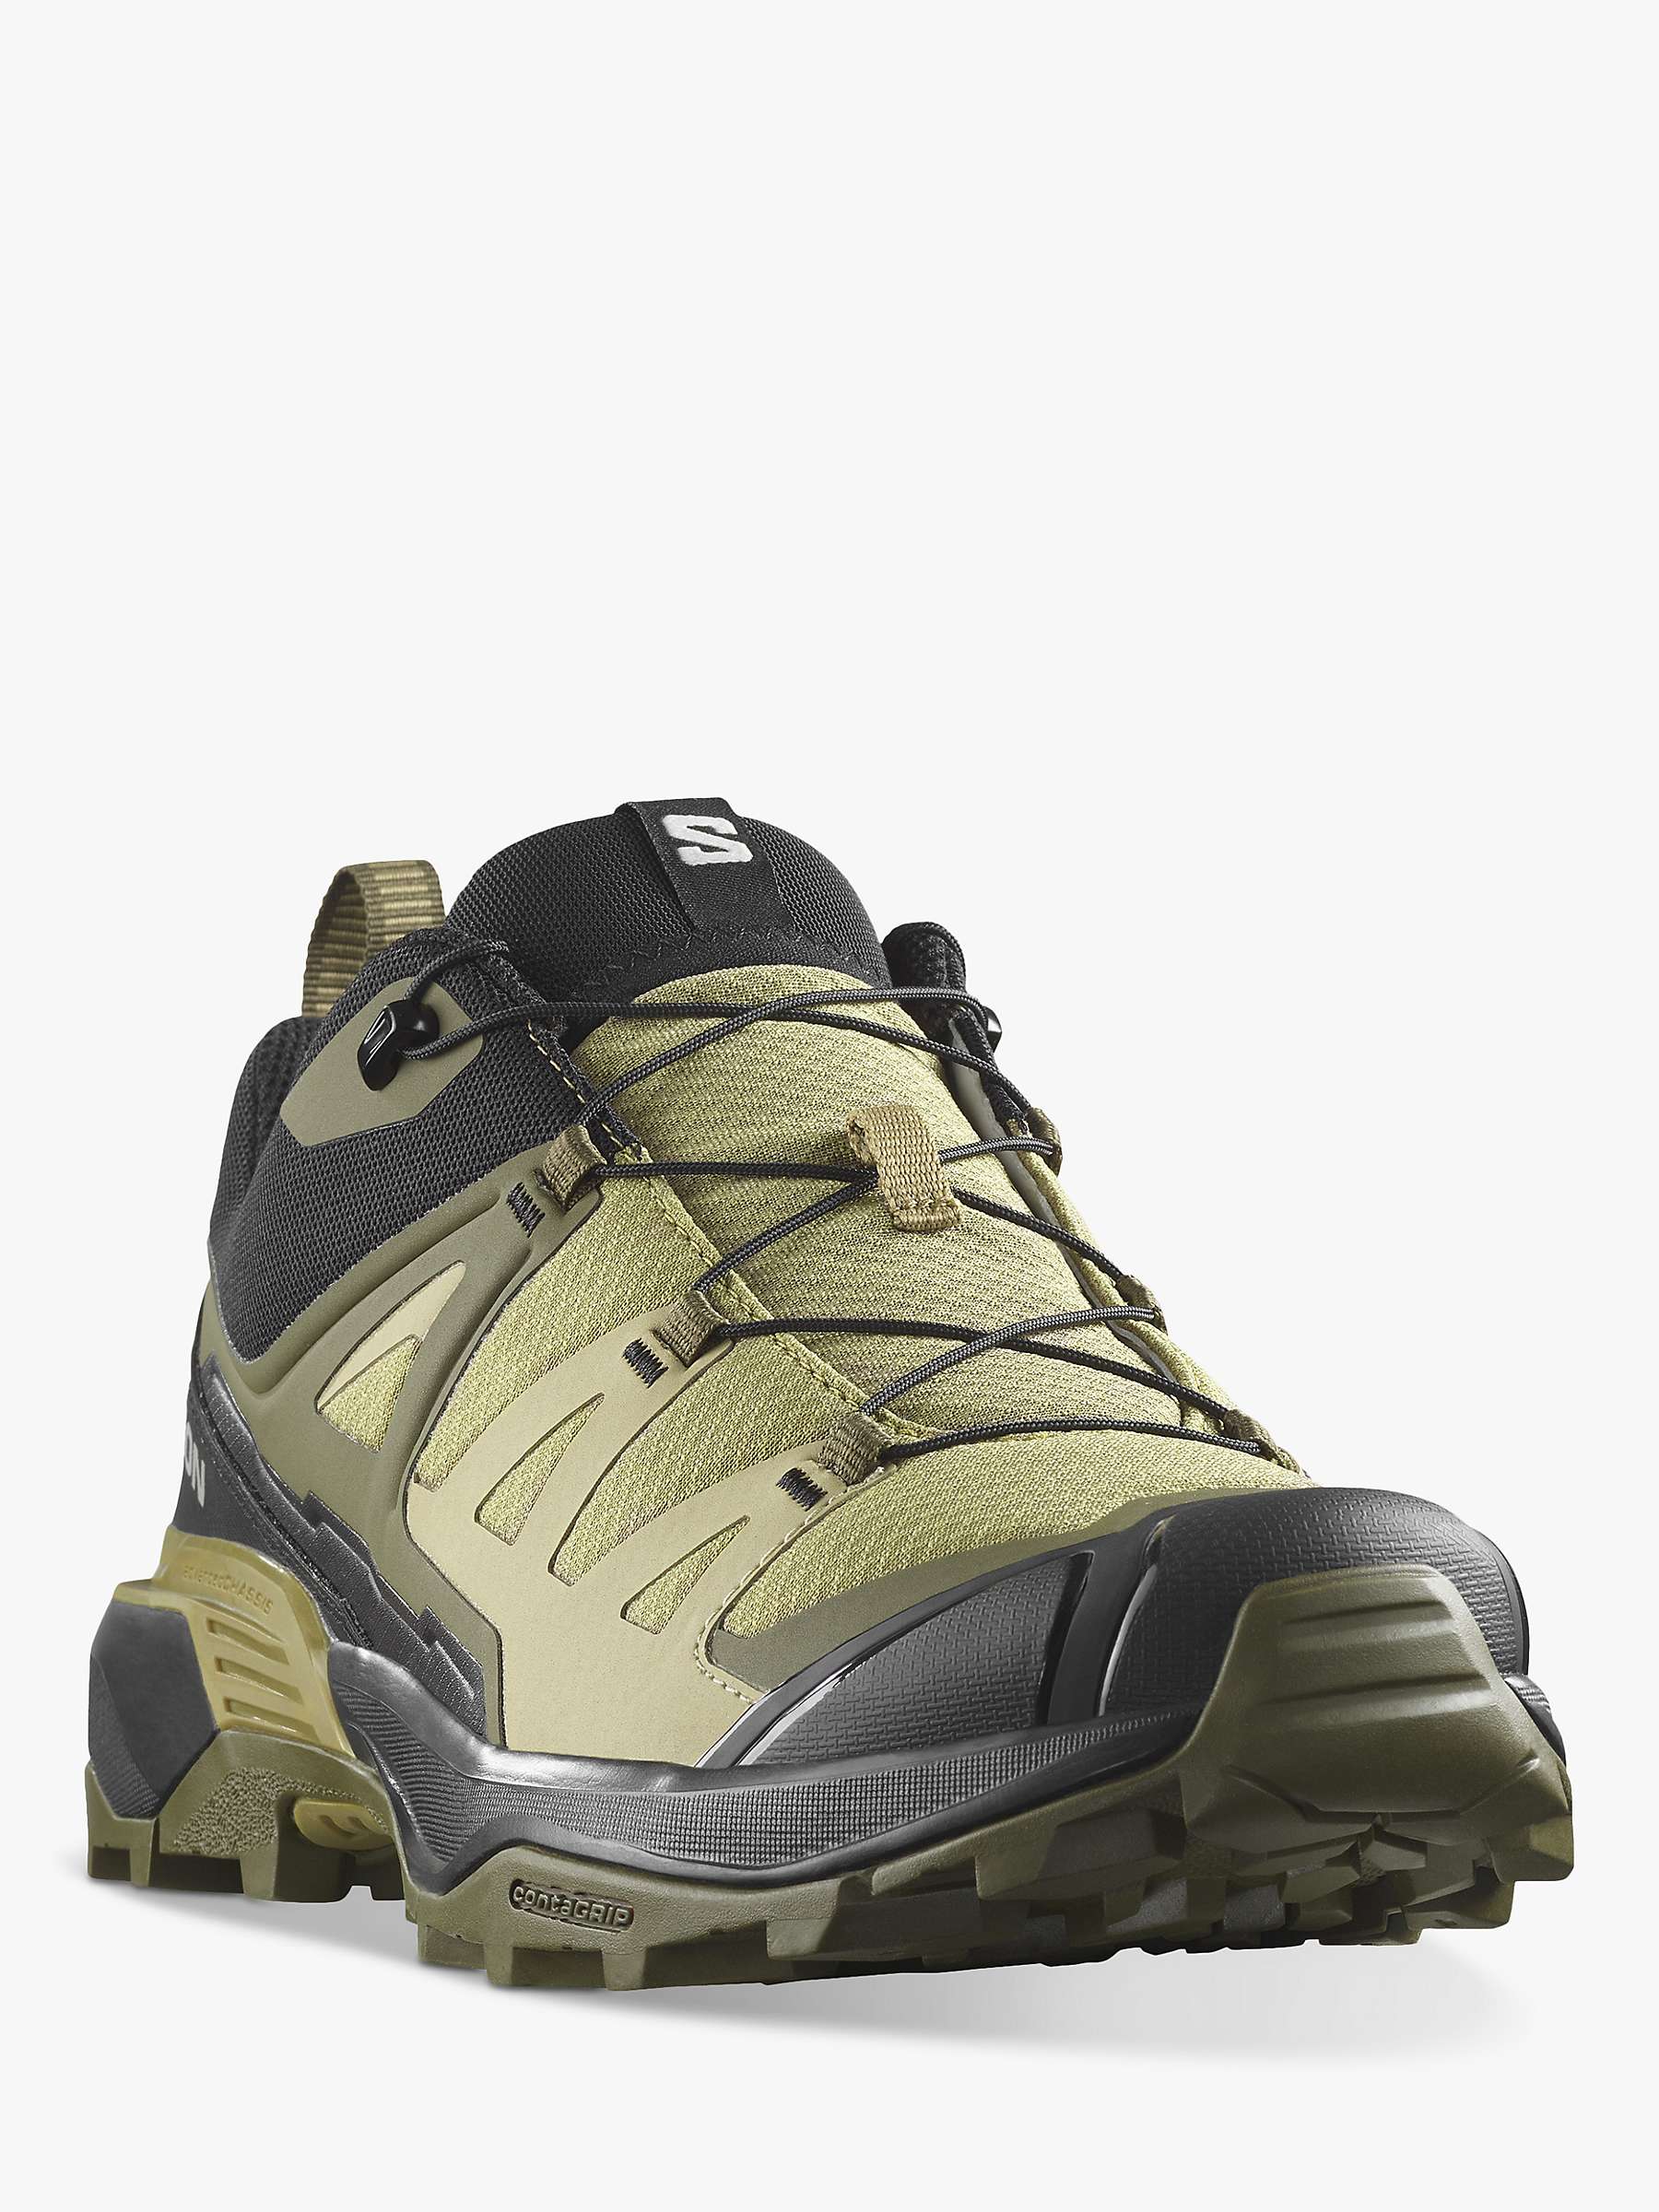 Buy Salomon X Ultra 360 Men's Hiking Shoes Online at johnlewis.com